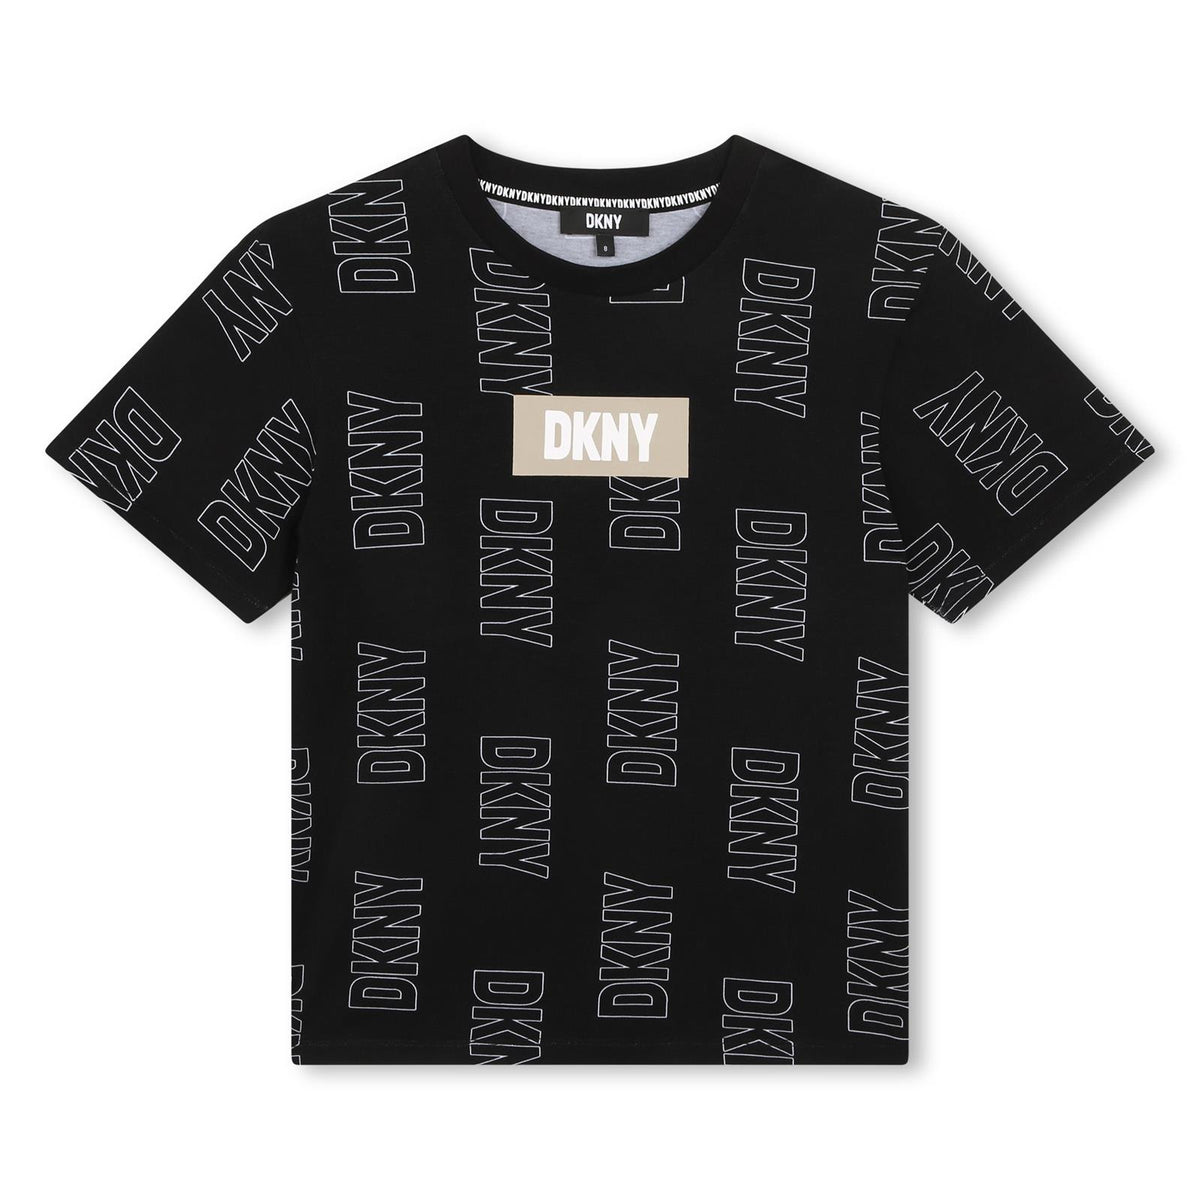 DKNY Black Branded T-Shirt